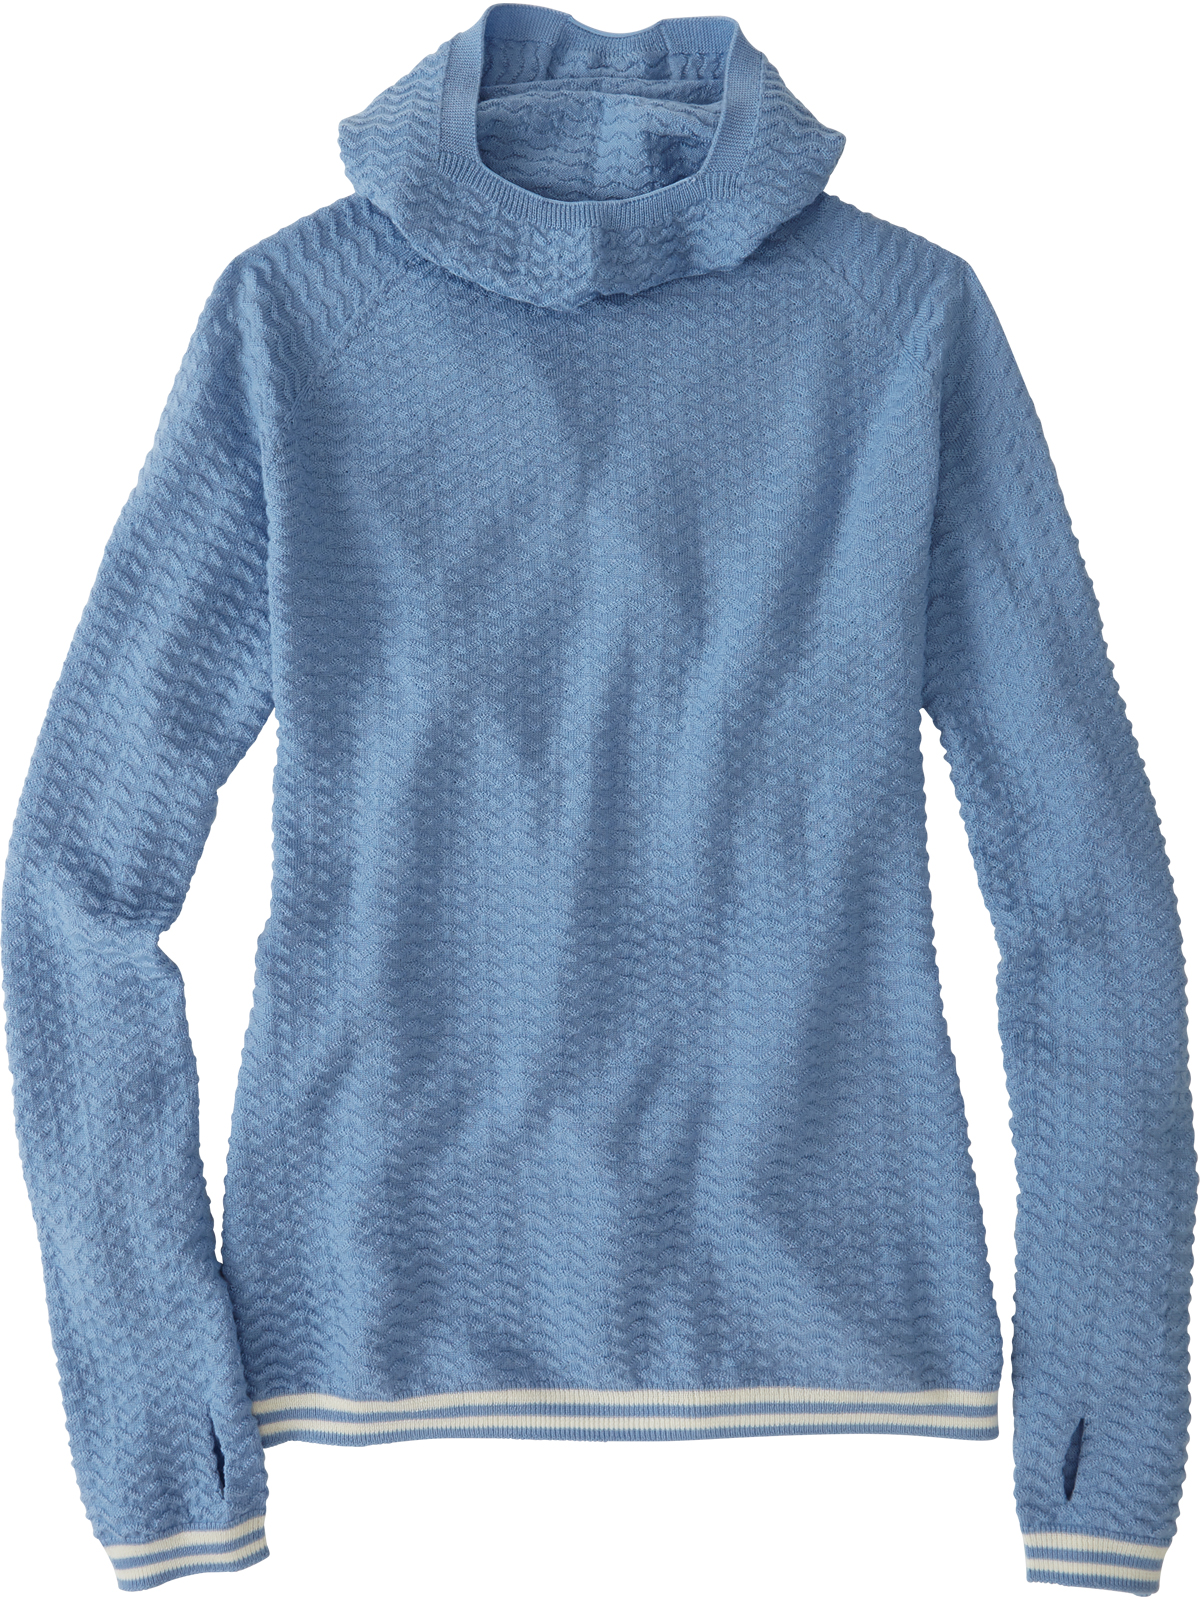 Krimson Klover Sweater Hoodie: Permafrost